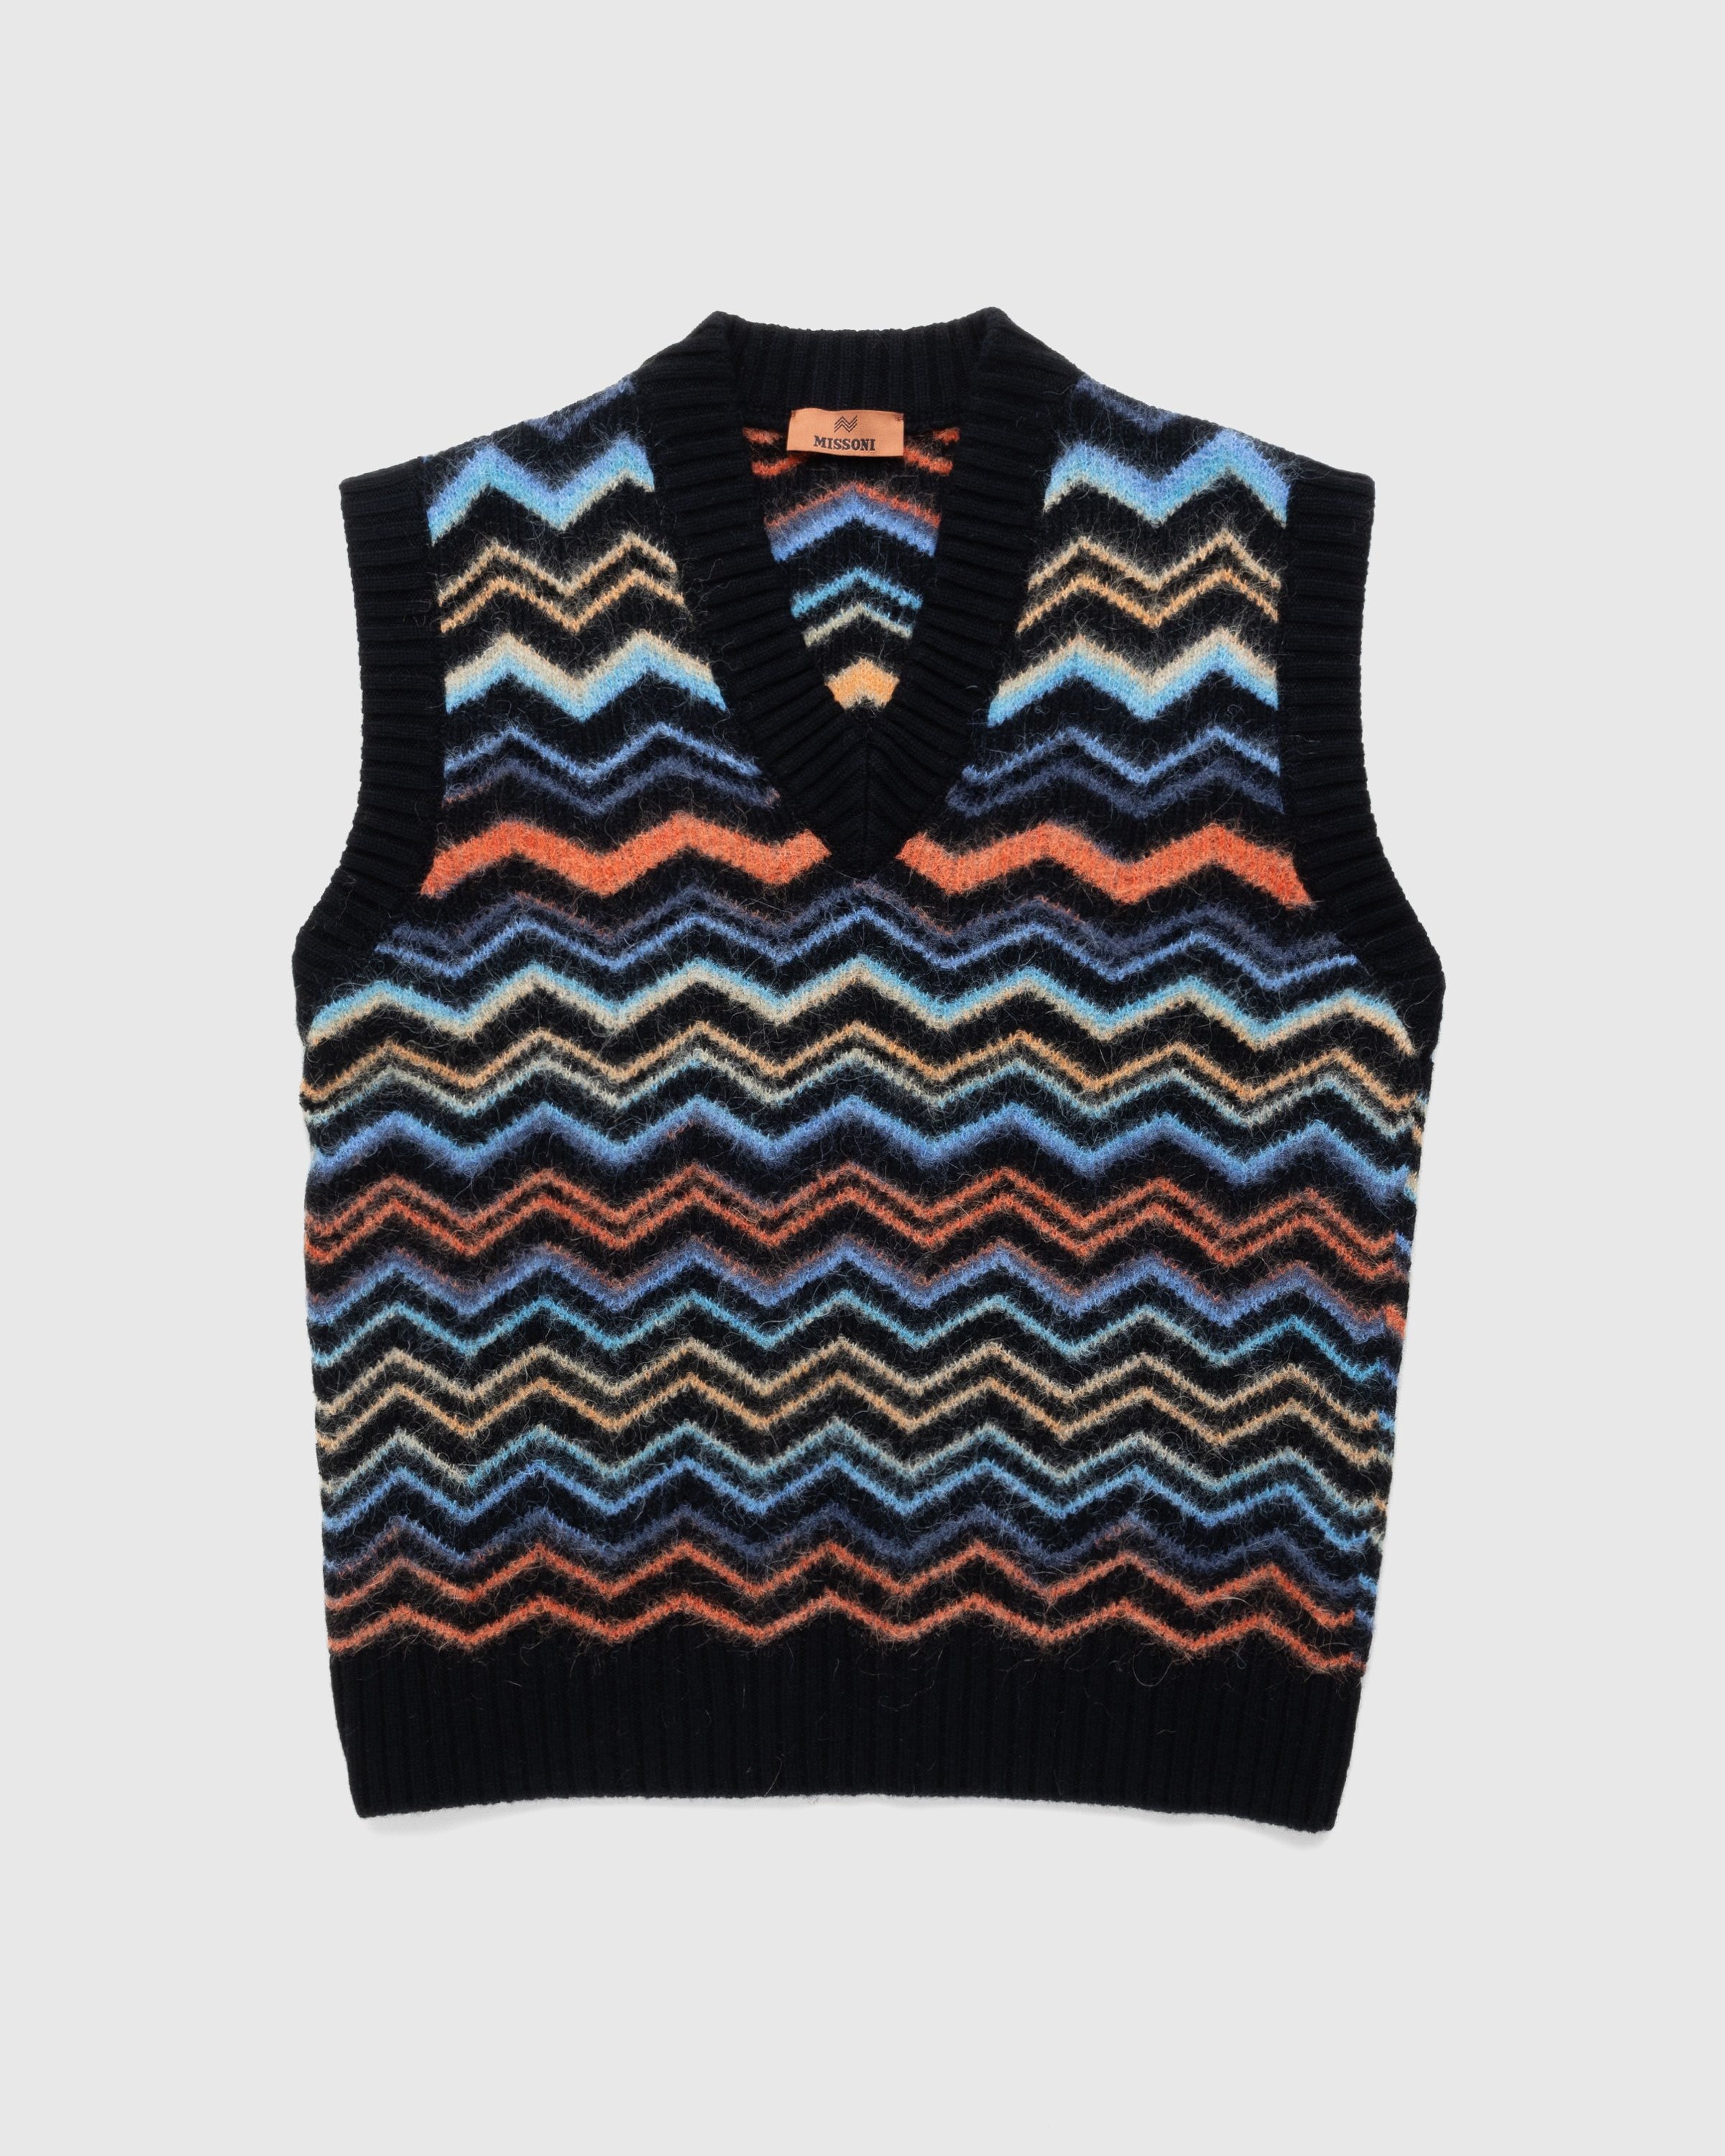 Missoni – Zig Zag Knit Vest Black/Orange/Light Blue